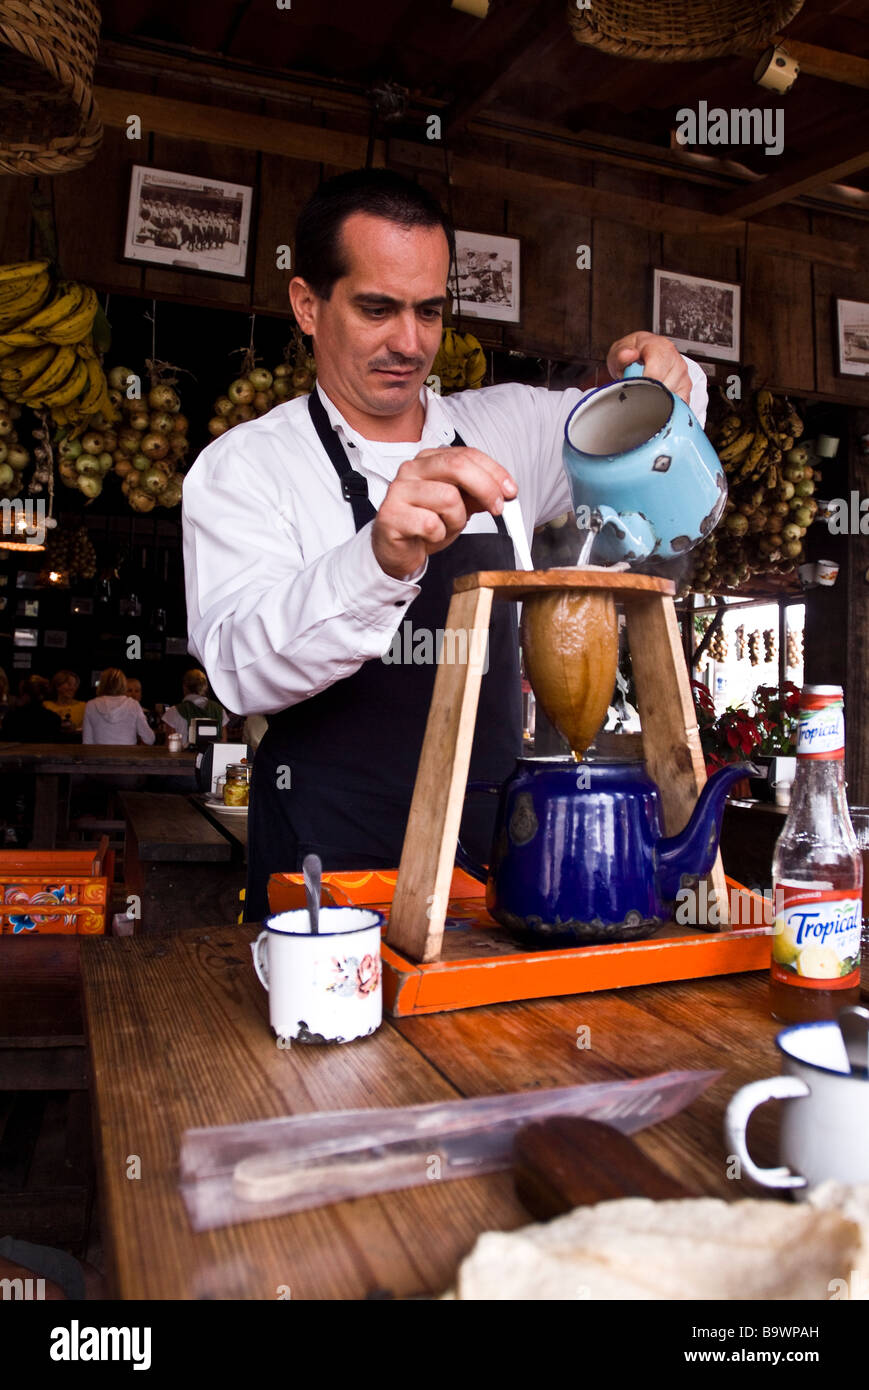 https://c8.alamy.com/comp/B9WPAH/man-making-coffee-with-traditional-chorreador-in-a-restaurant-in-san-B9WPAH.jpg